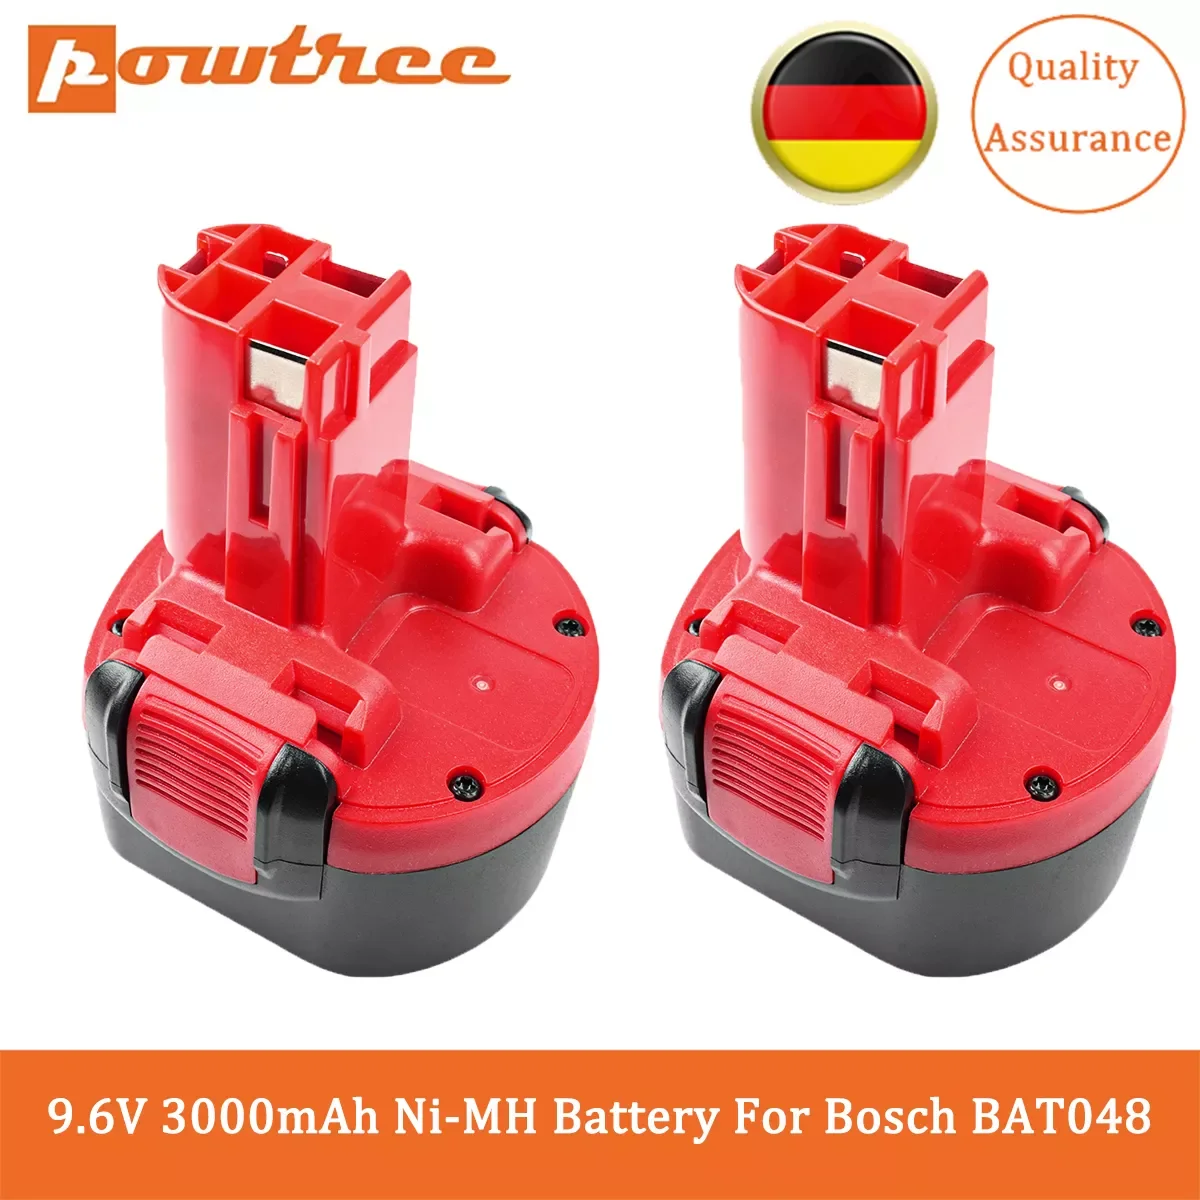 

New in 3000mAh 9.6V NI-MH BAT048 Rechargeable Battery for Bosch PSR 960 BH984 BAT119 BAT100 BAT001 BPT1041 BH974 2607335260